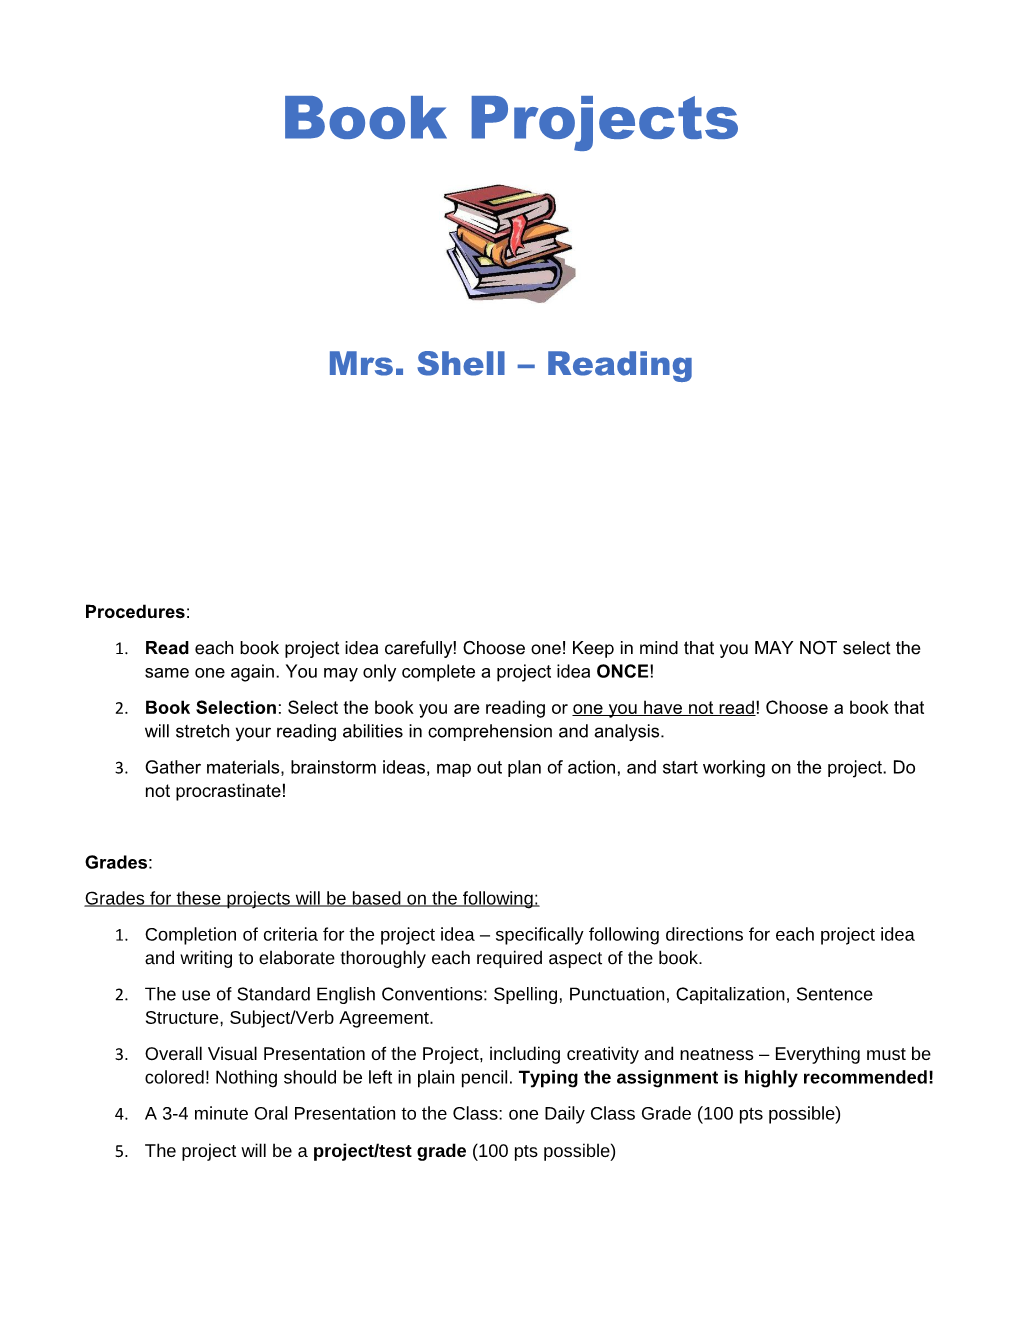 Mrs. Shell Reading